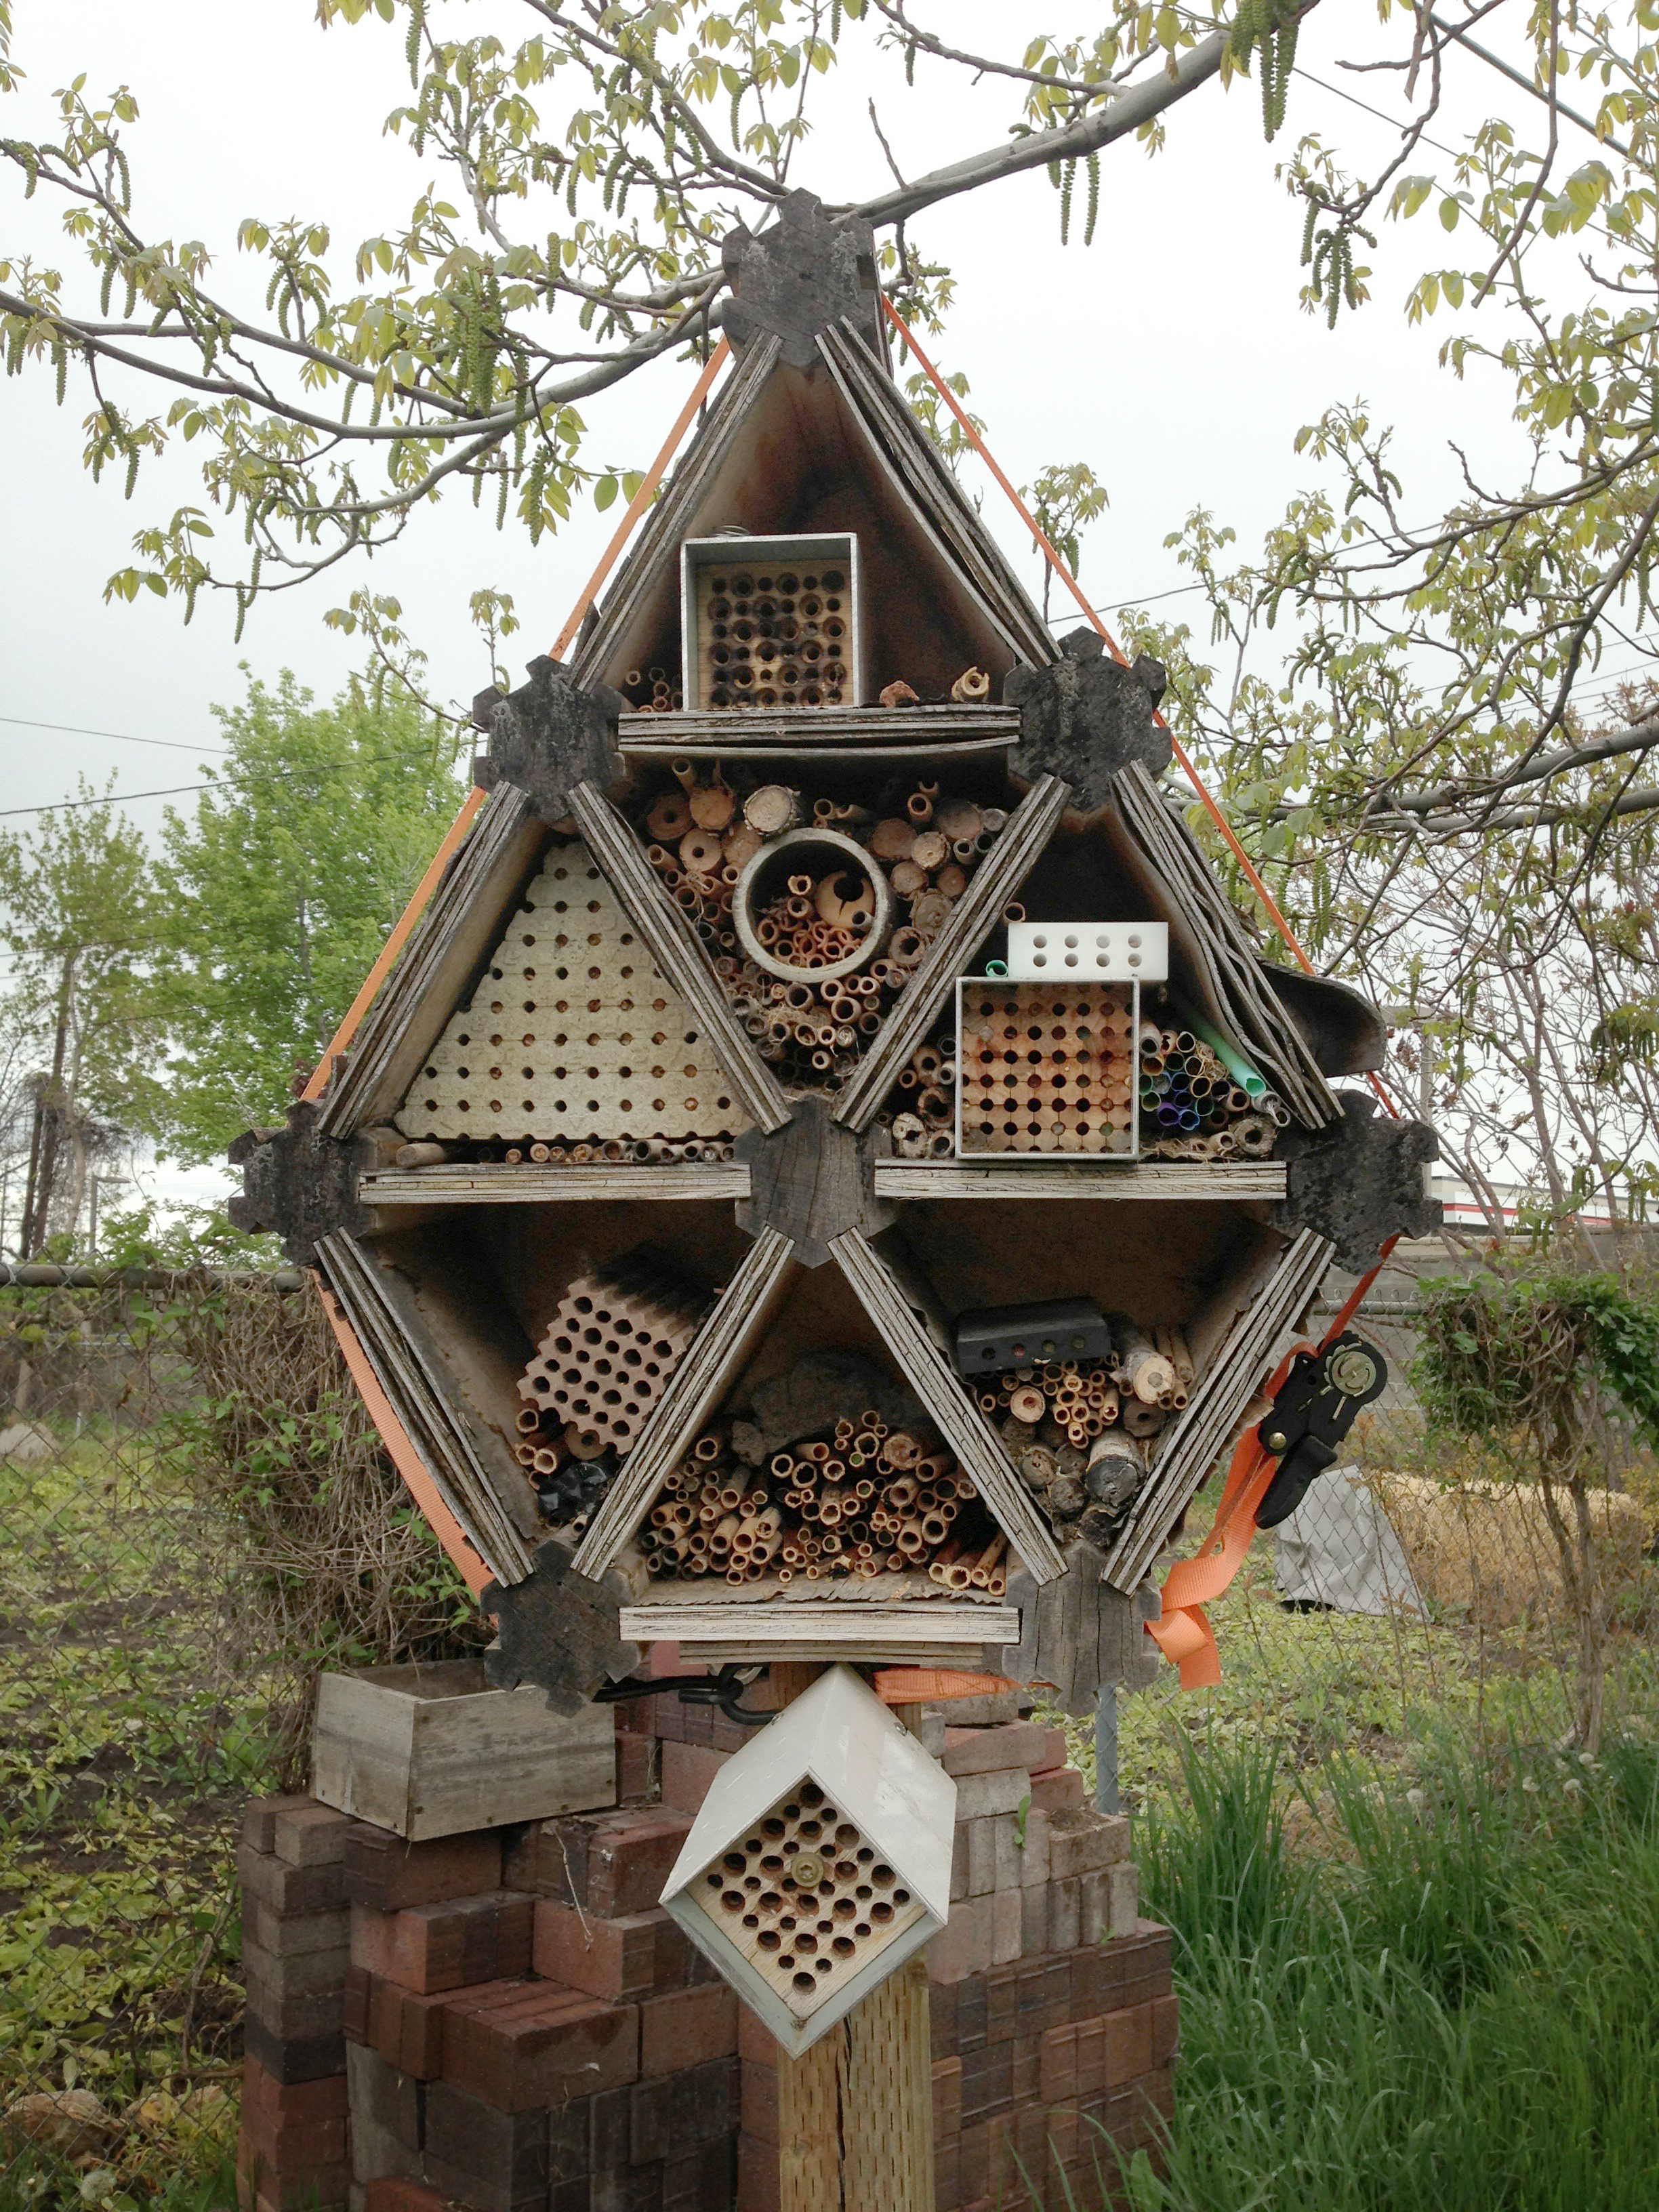 Plastic Homes for Mason Bees